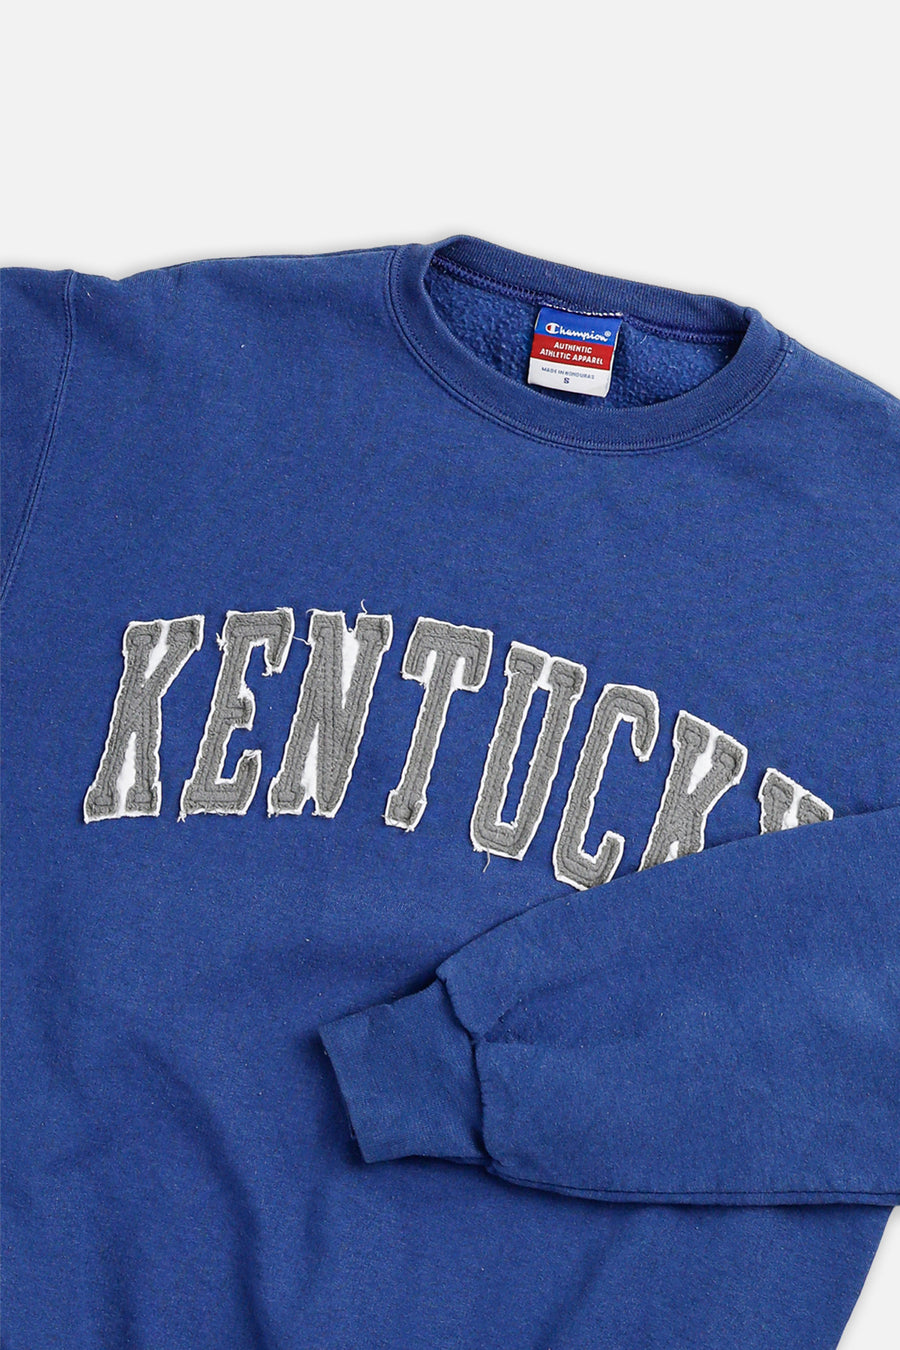 Vintage Kentucky Sweatshirt - S